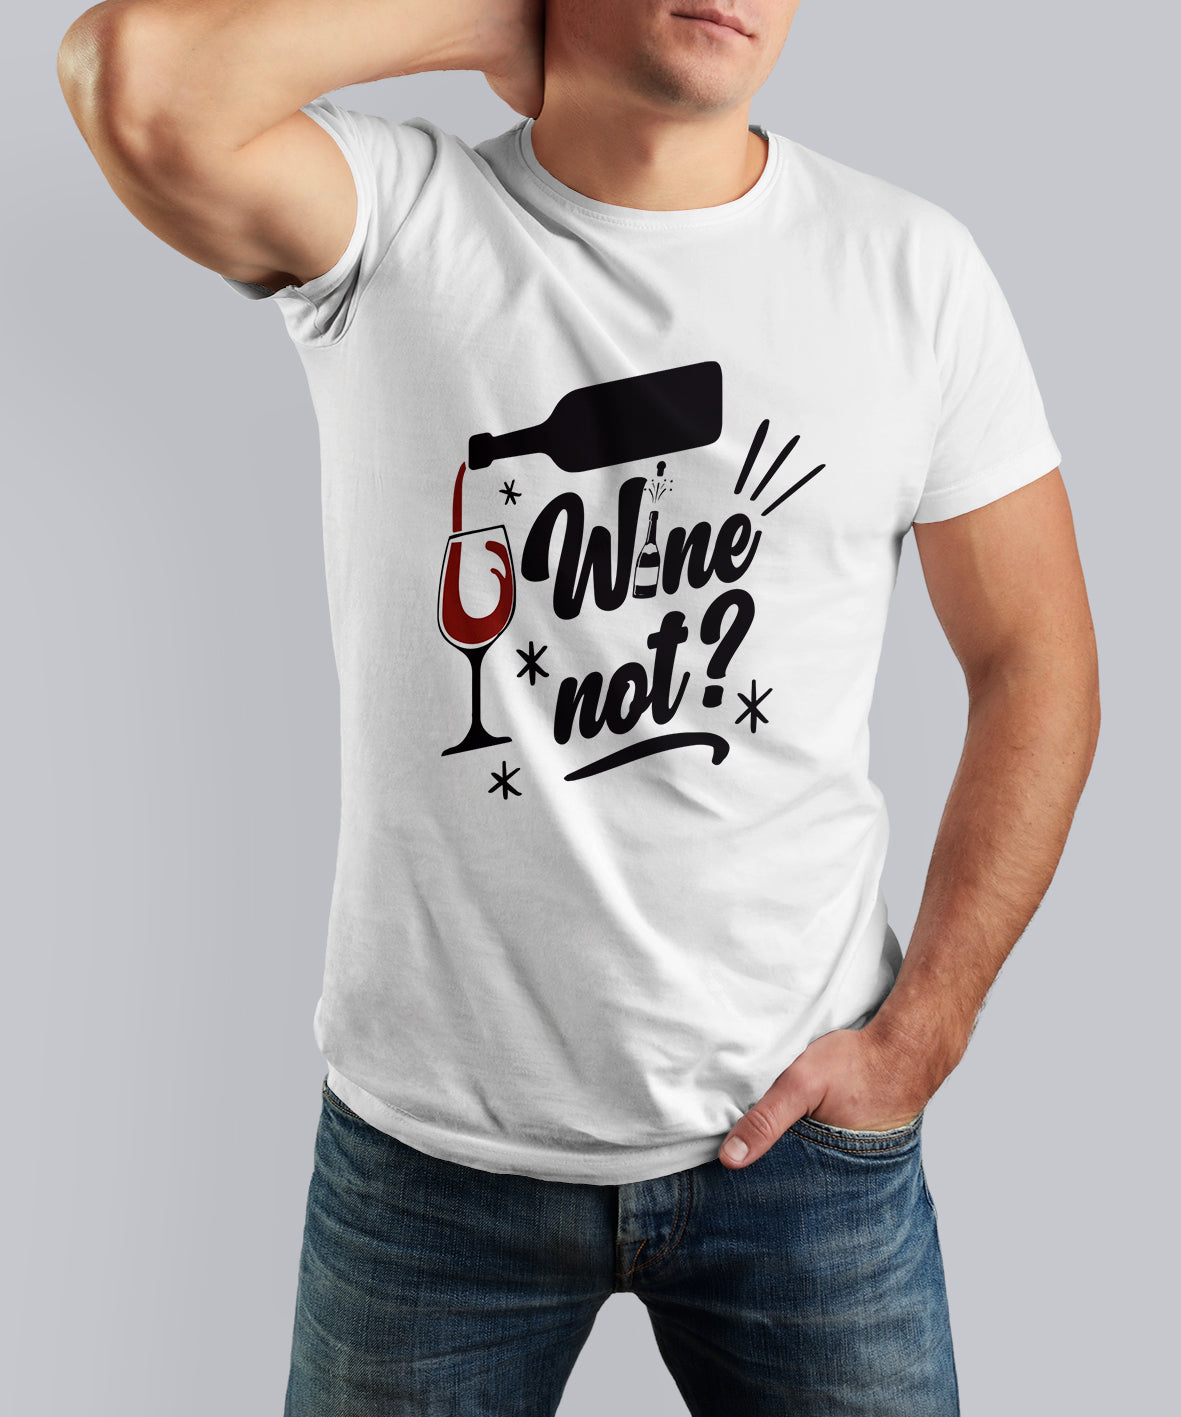 T-shirt "WINE NOT?"